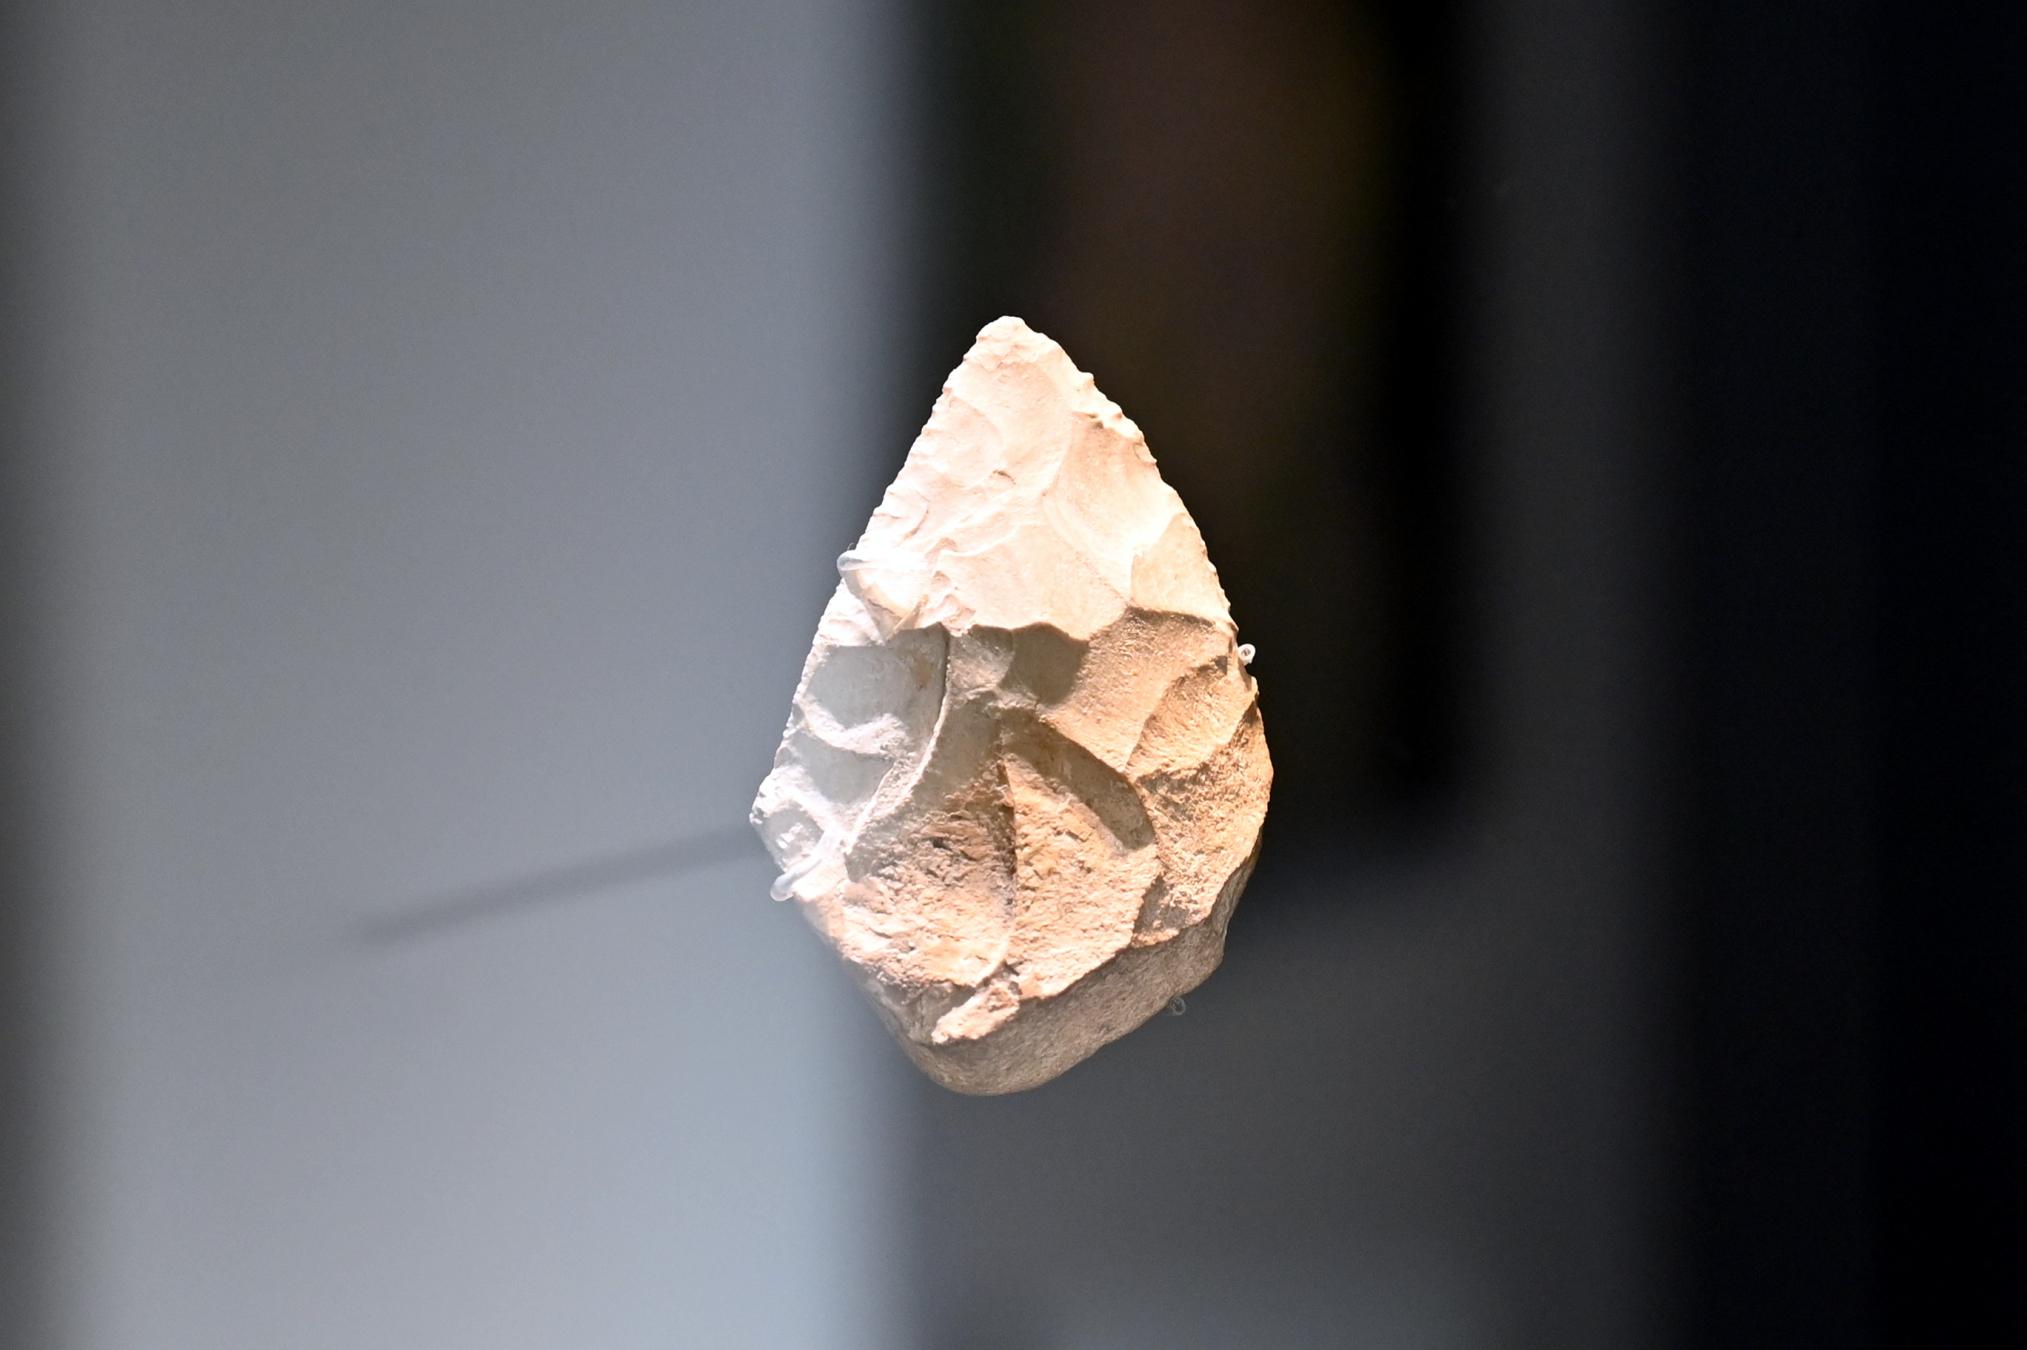 Kleiner Faustkeil, Paläolithikum, 600000 - 10000 v. Chr., 70000 - 50000 v. Chr.